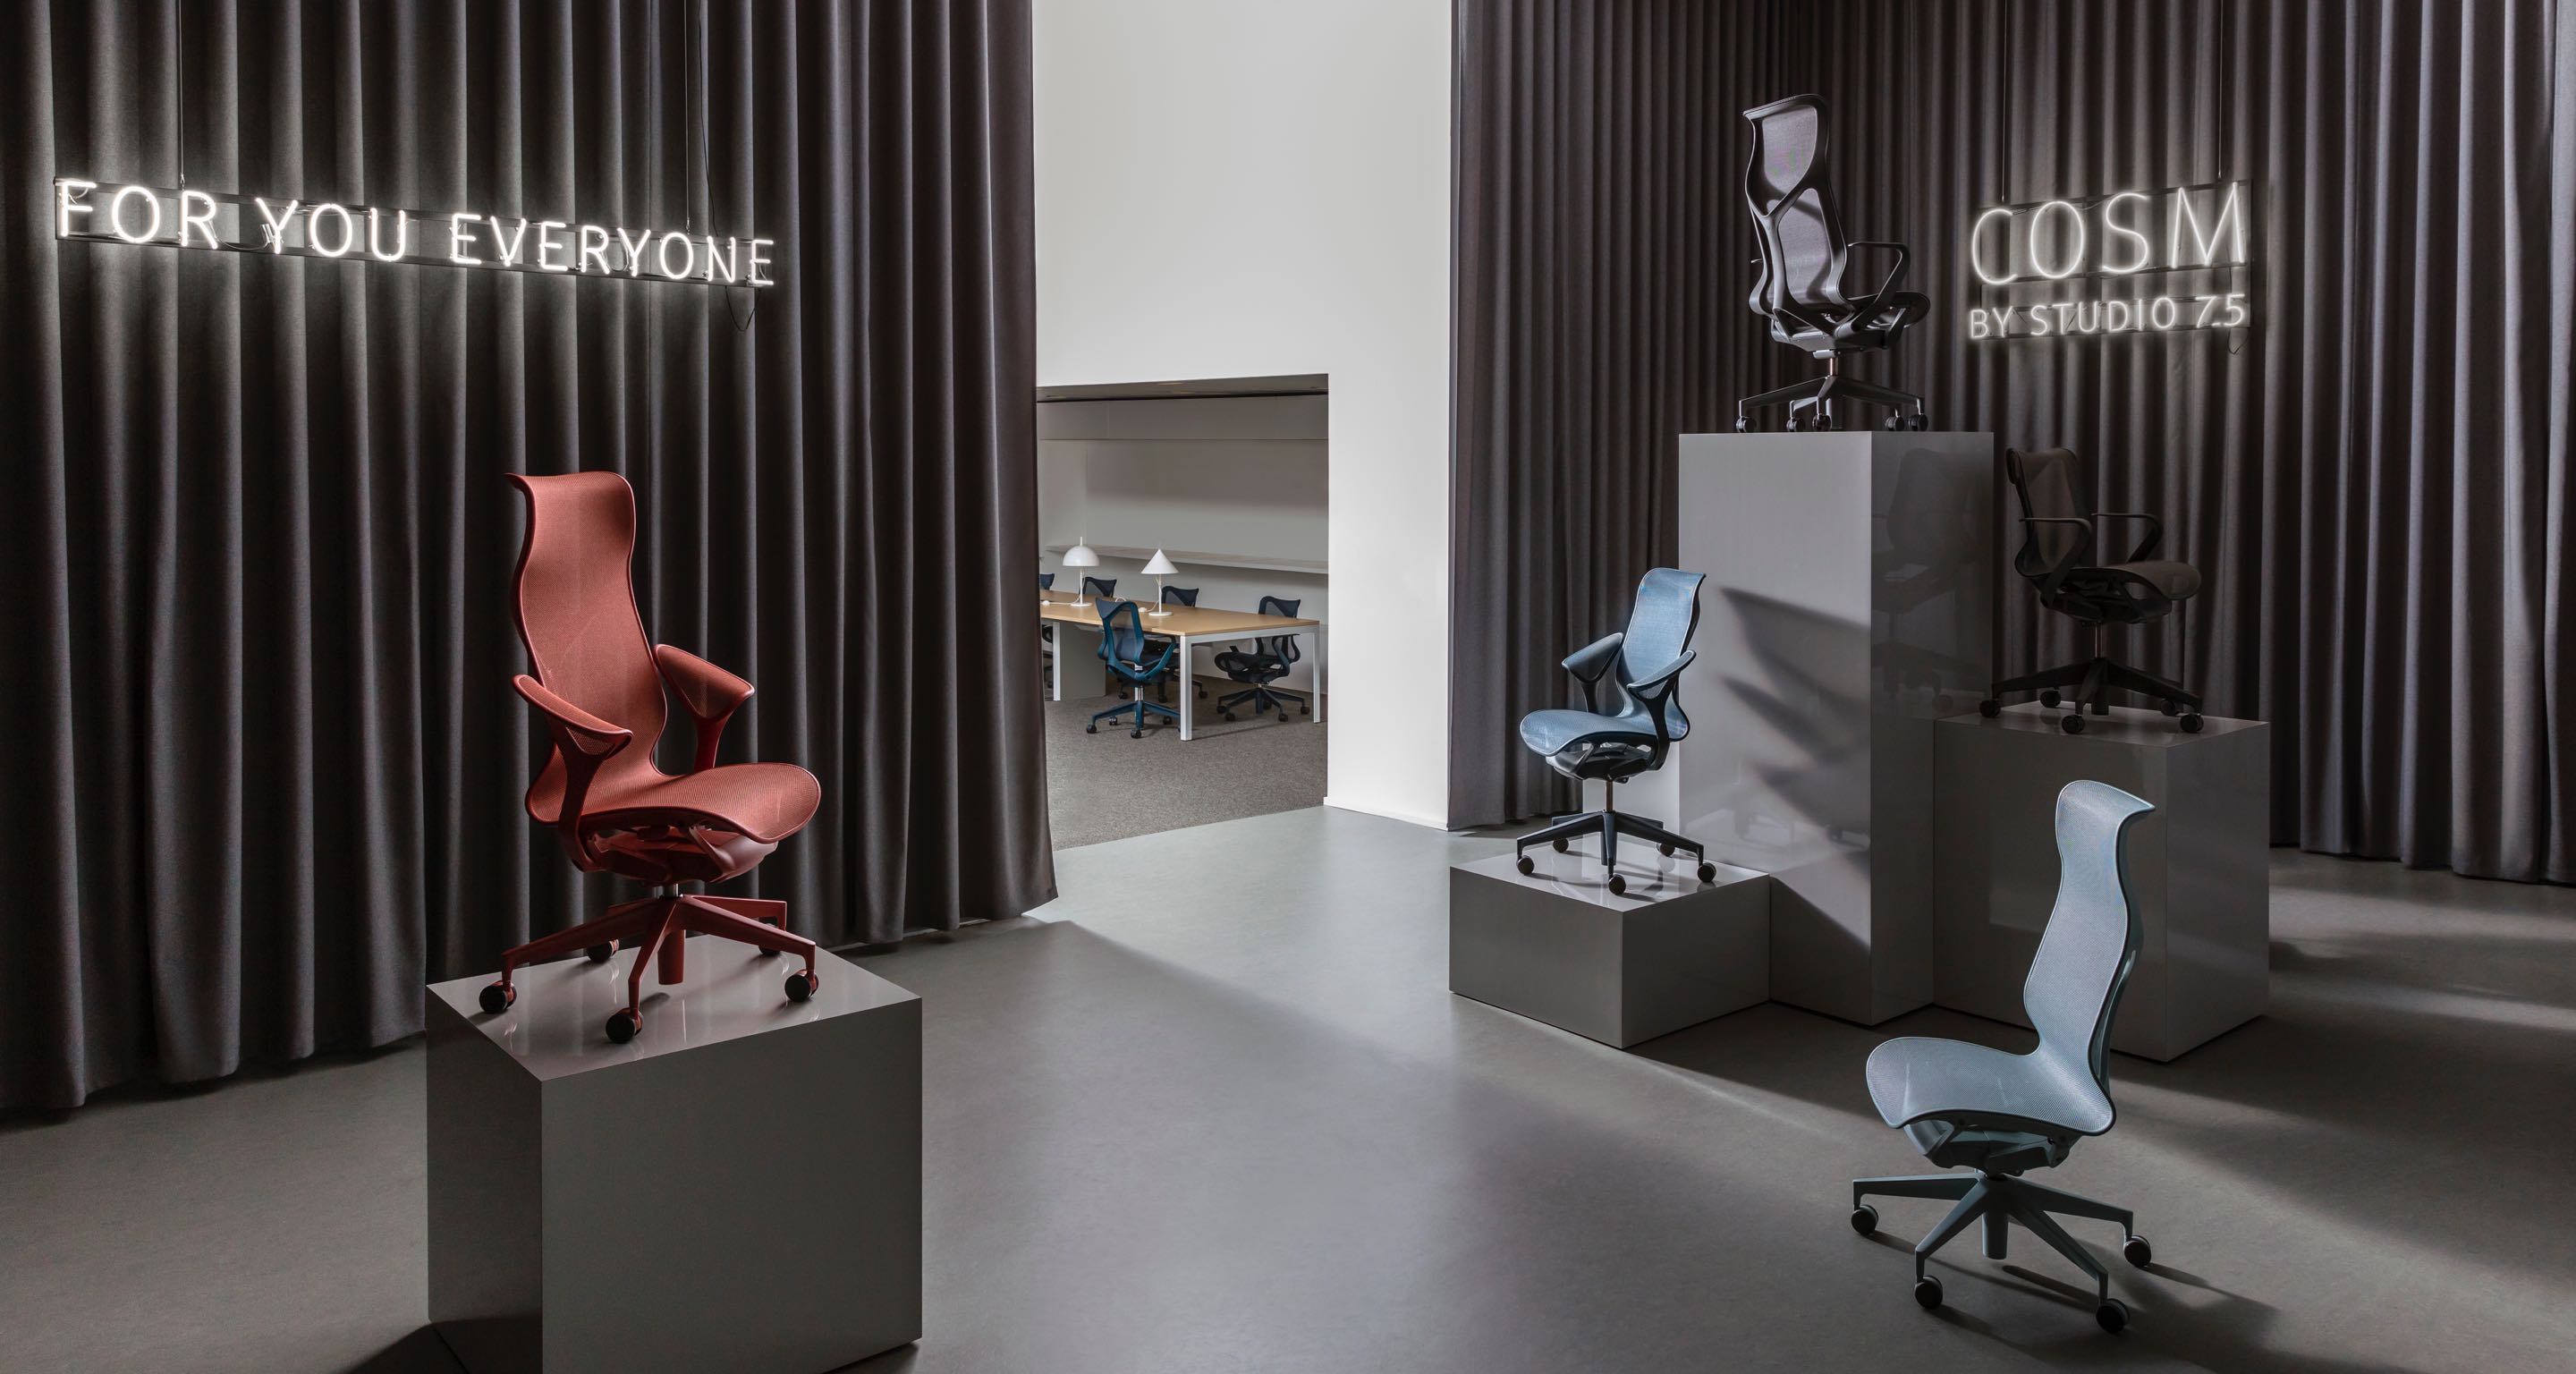 Herman Miller unveils Cosm task chair with fresh colors, sleek design